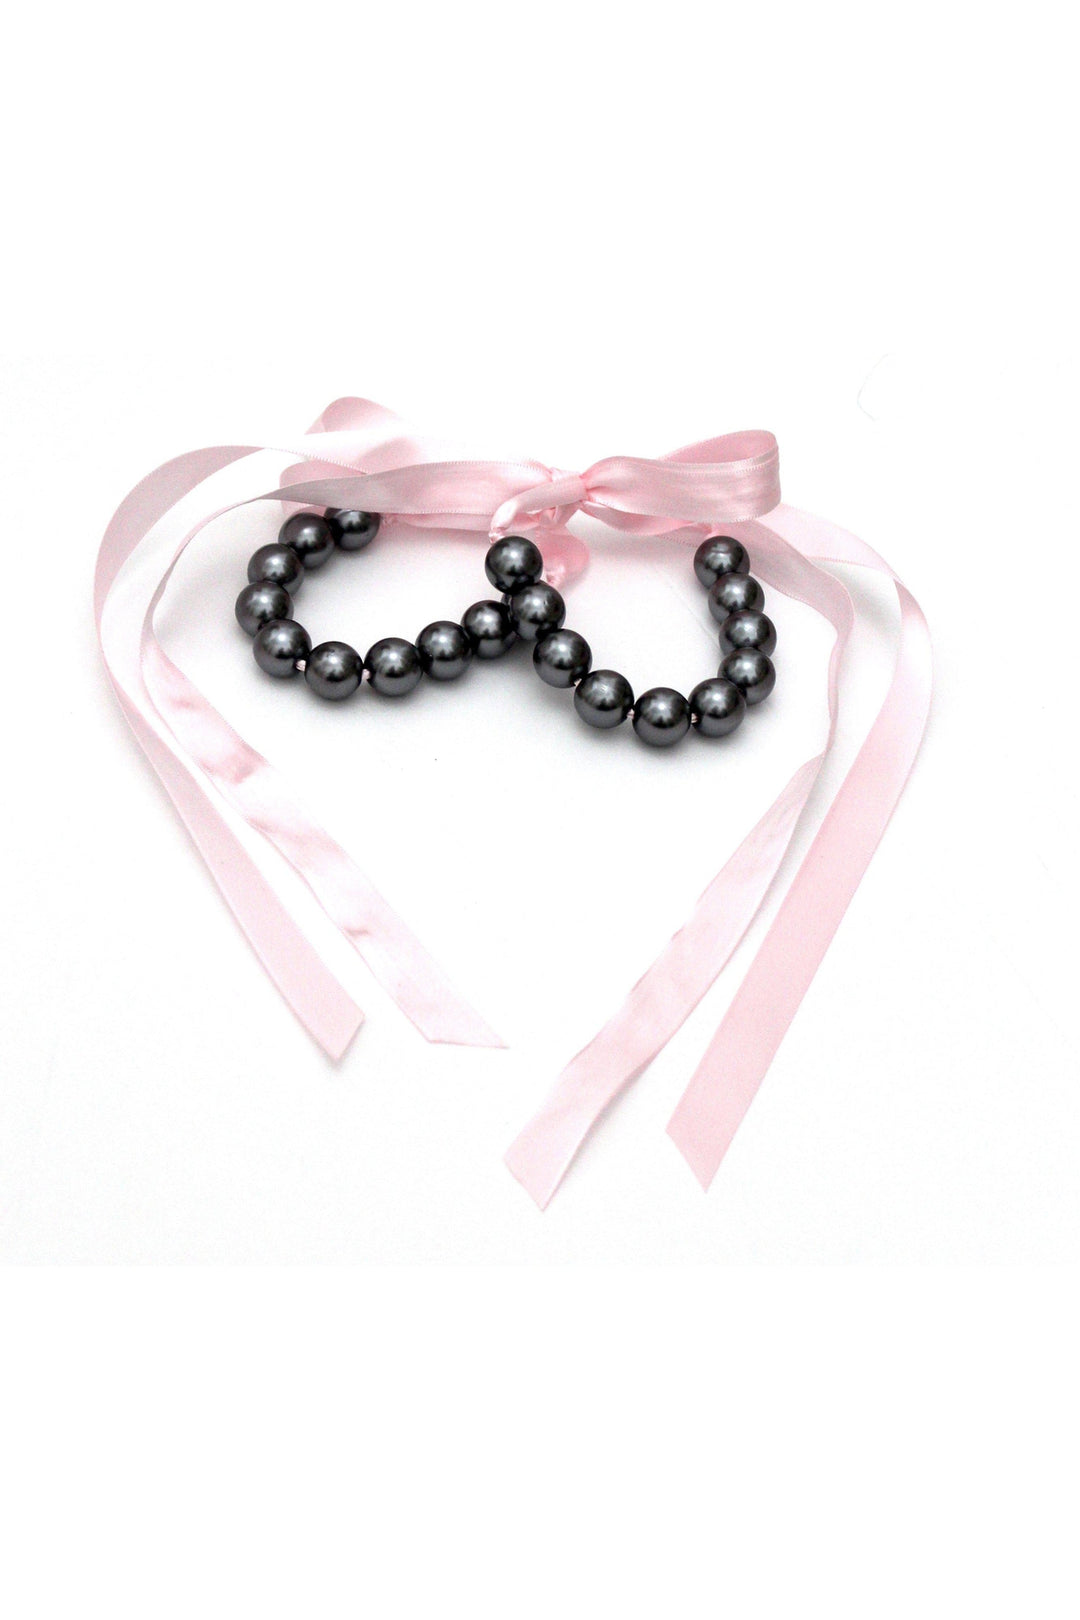 Mademoiselle Tyecuffs-Body Jewelry-Tyes By Tara-Pink-O/S-SEXYSHOES.COM